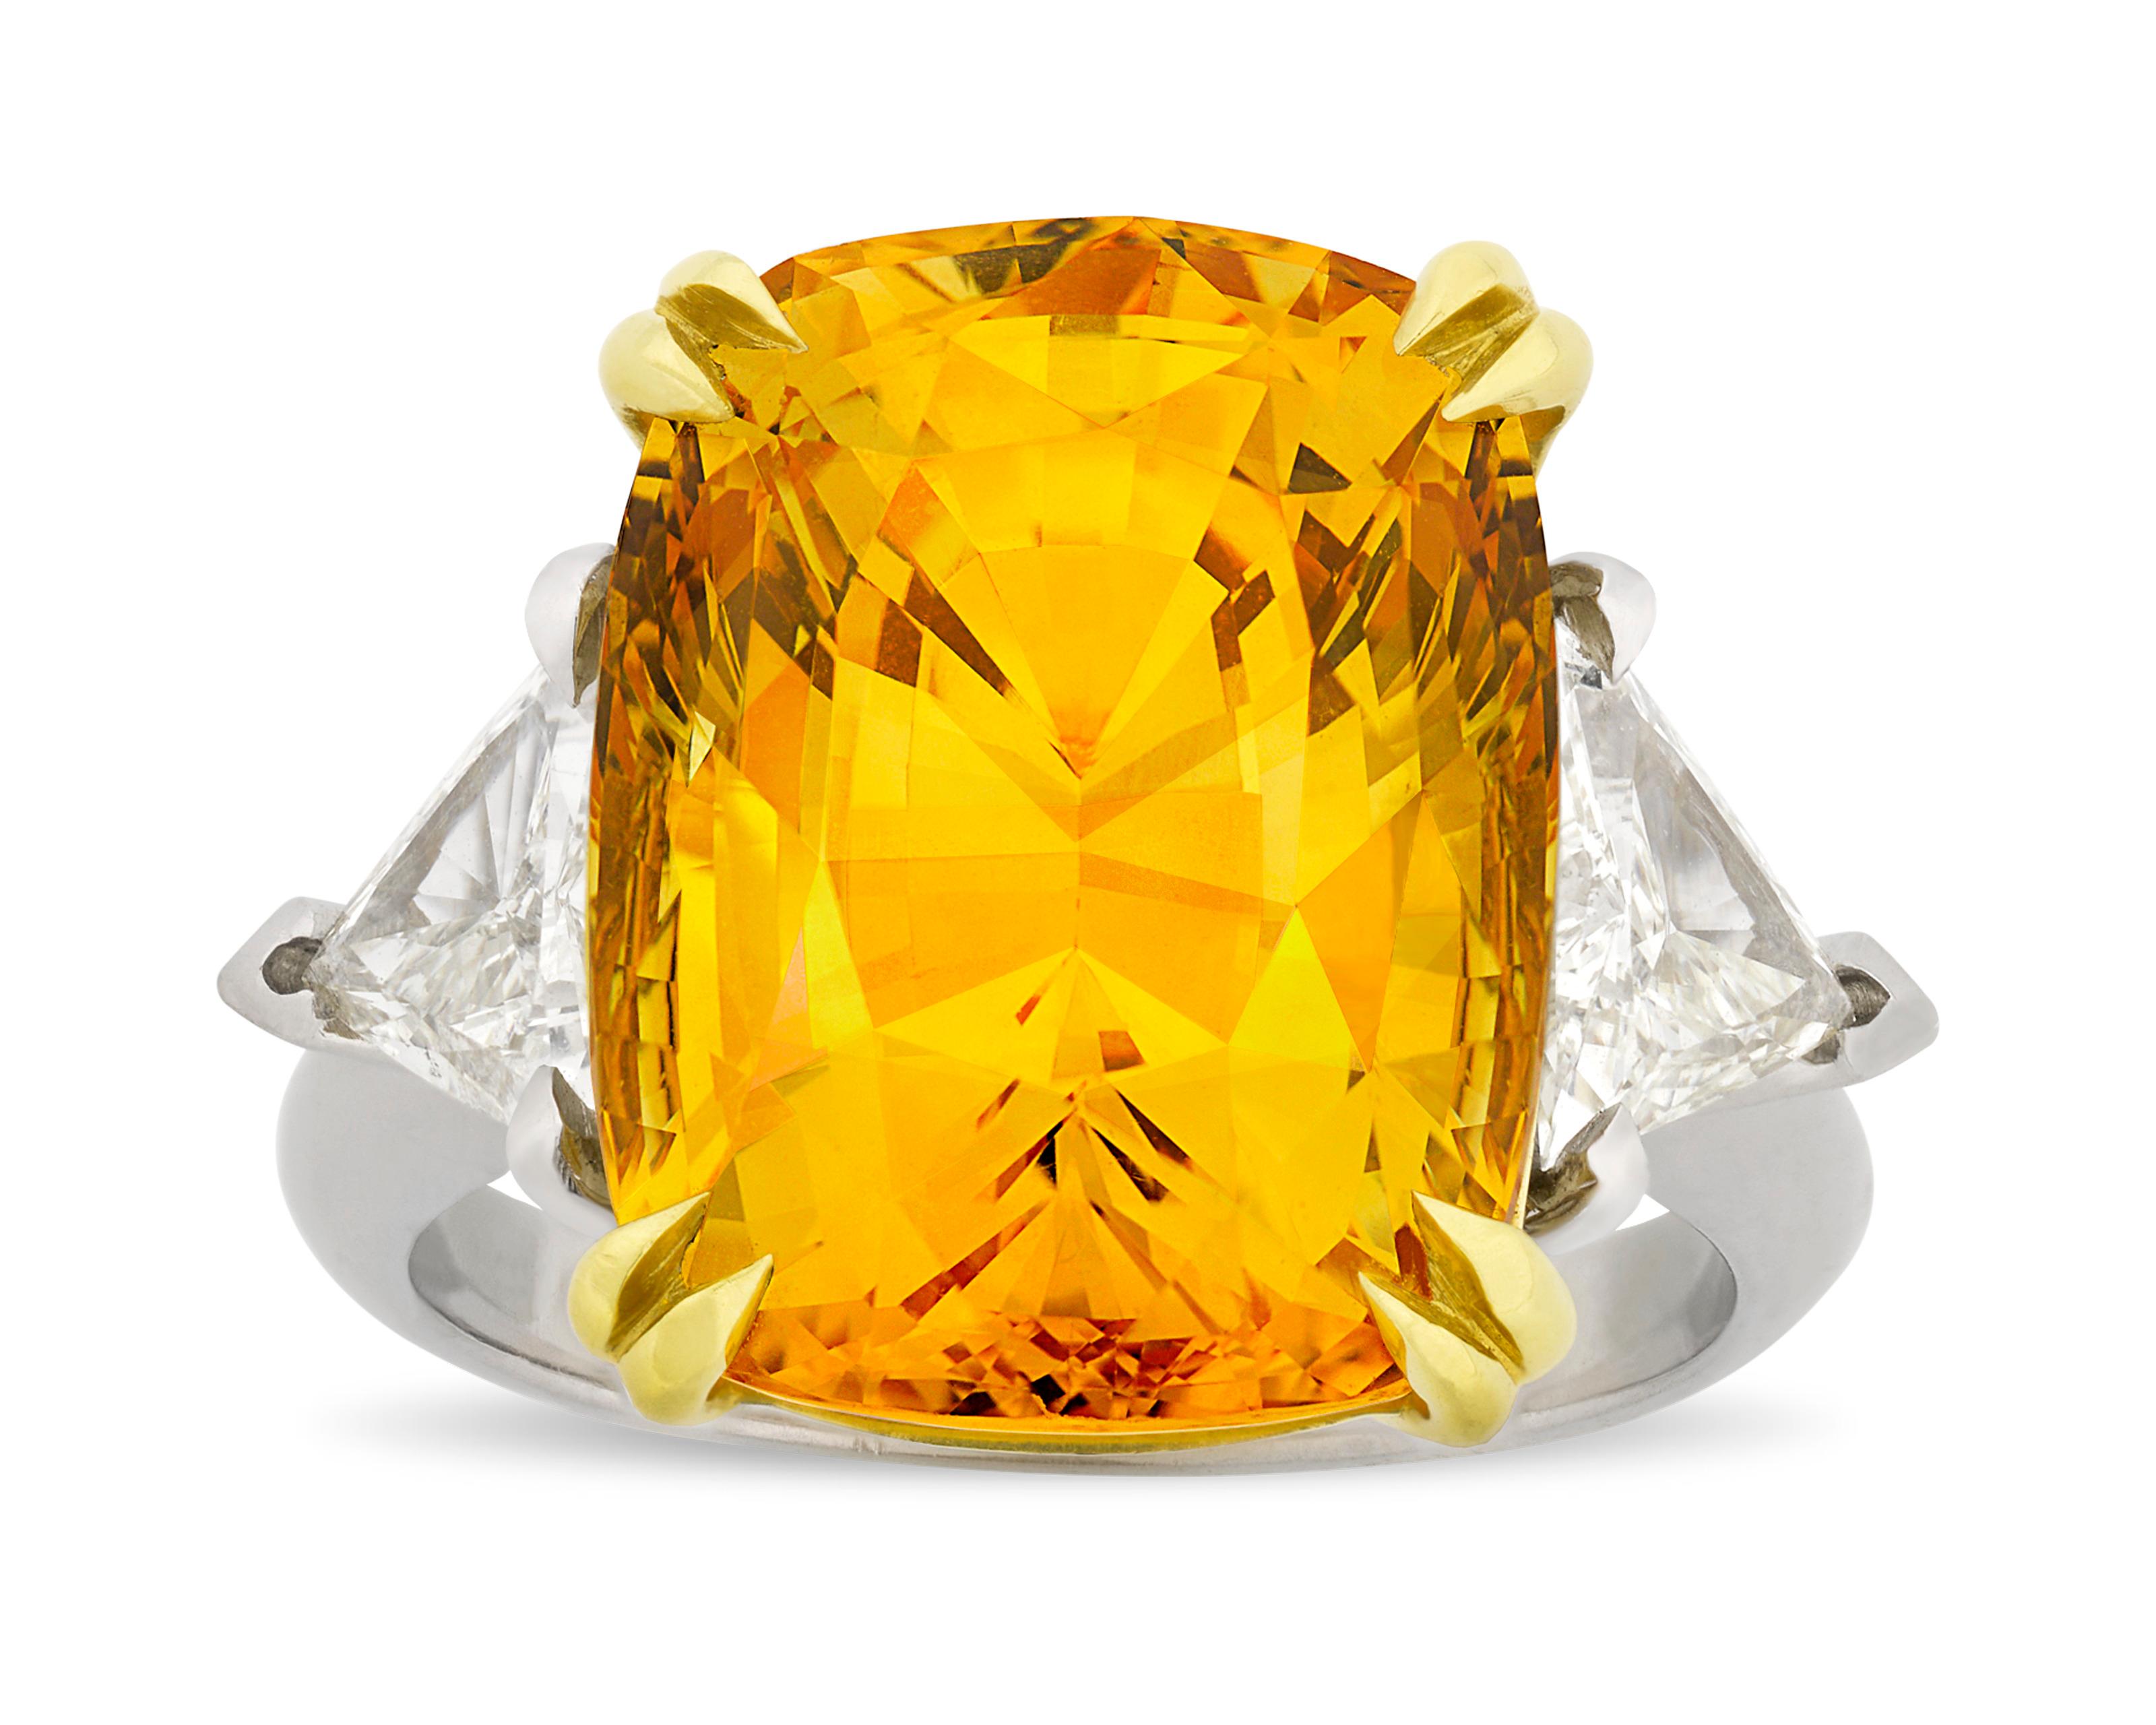 Brilliant Cut Orangy-Yellow Sapphire Ring, 15.83 Carat